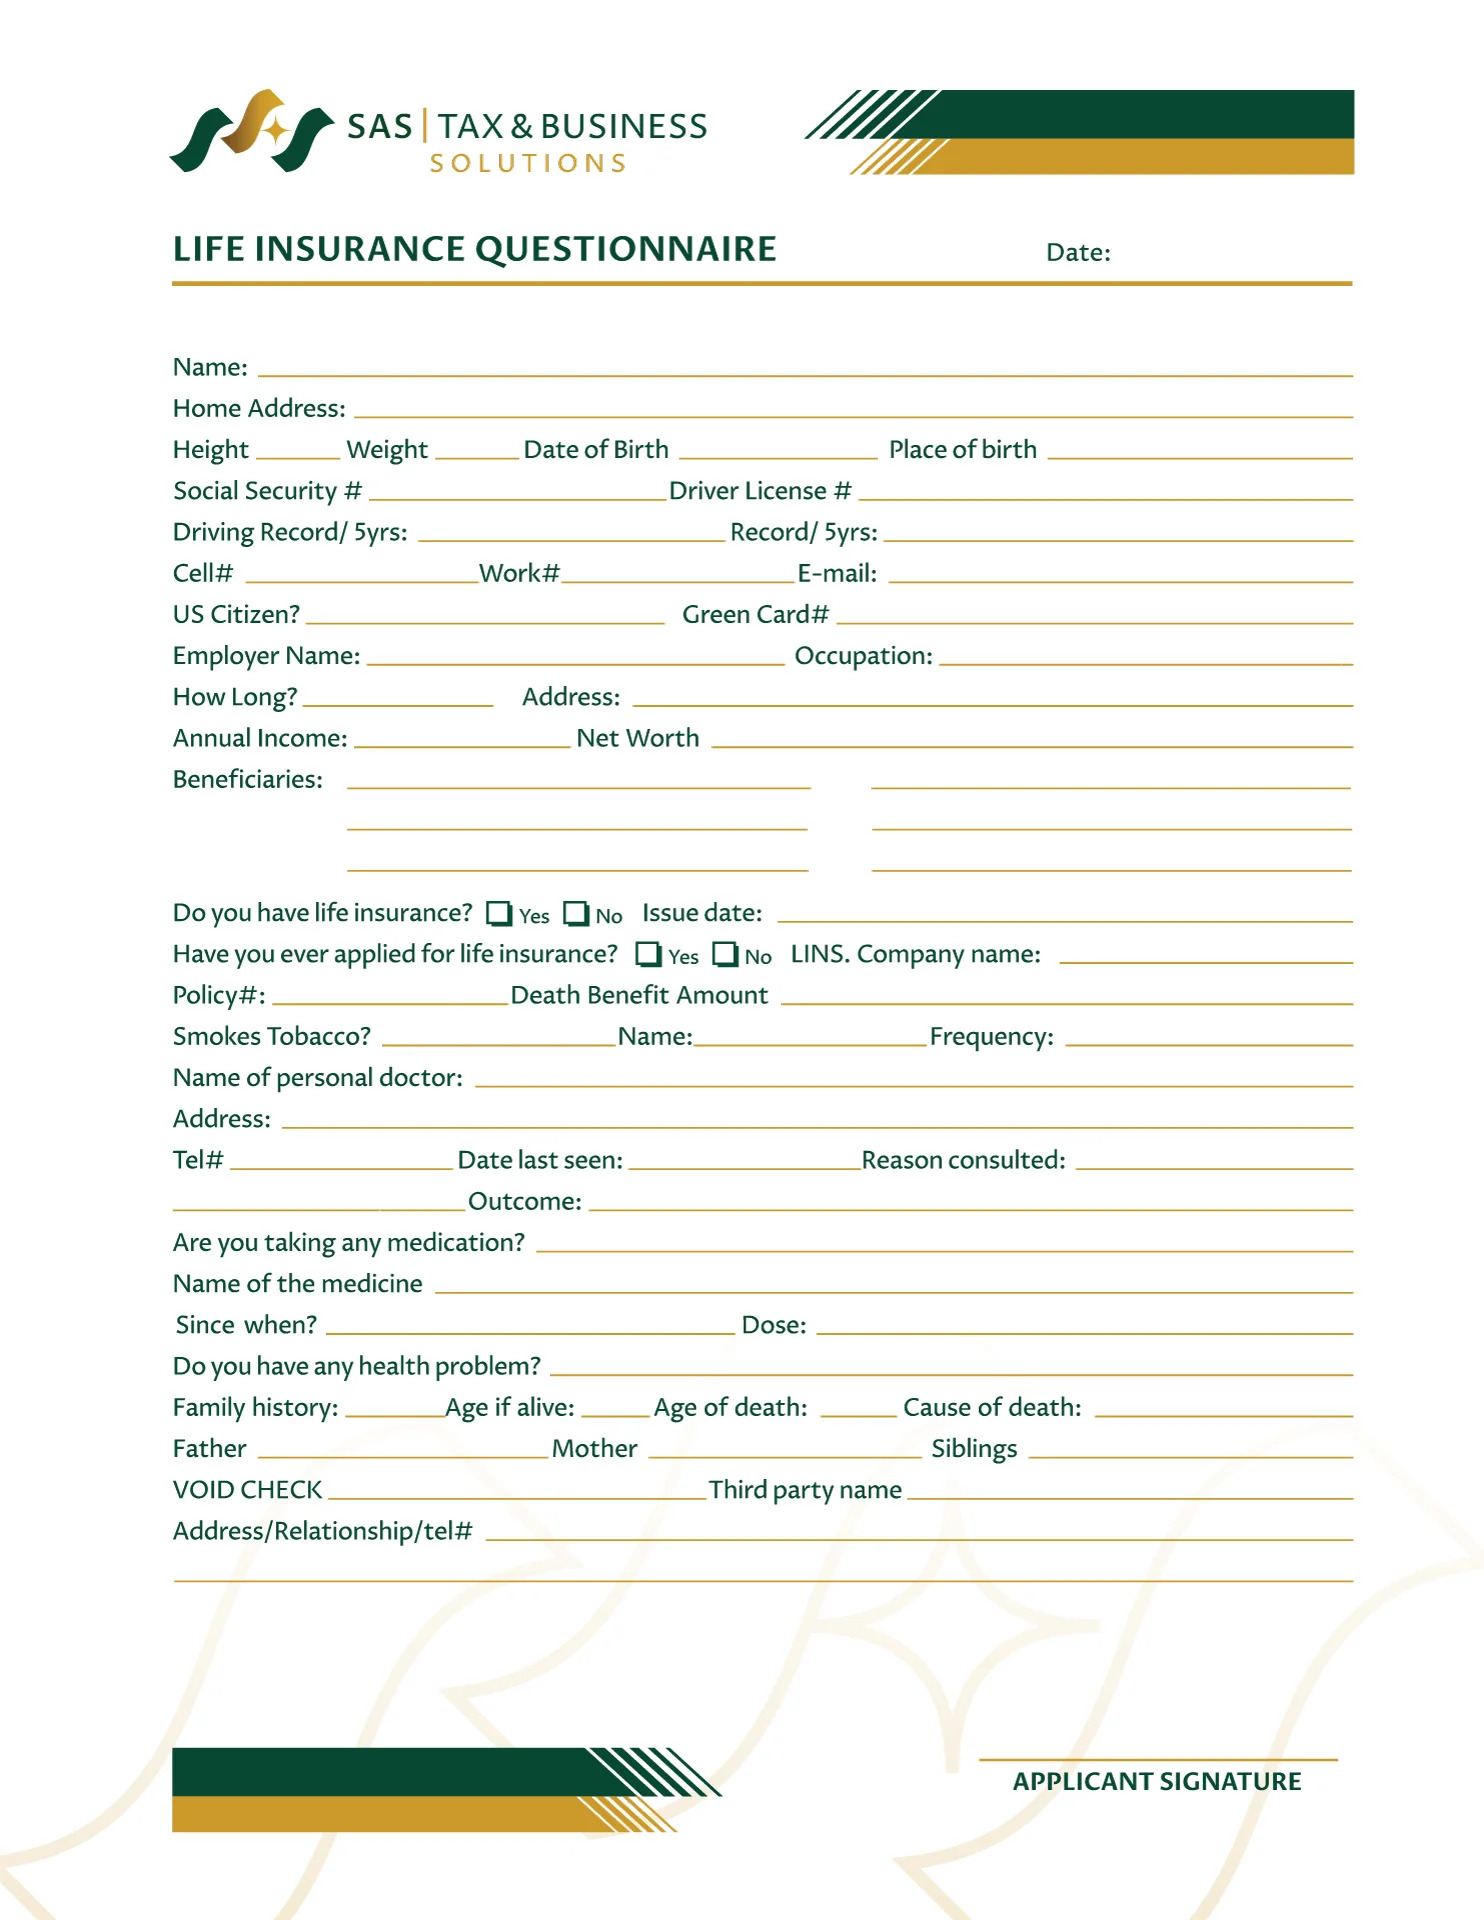 SAS Life Insurance form